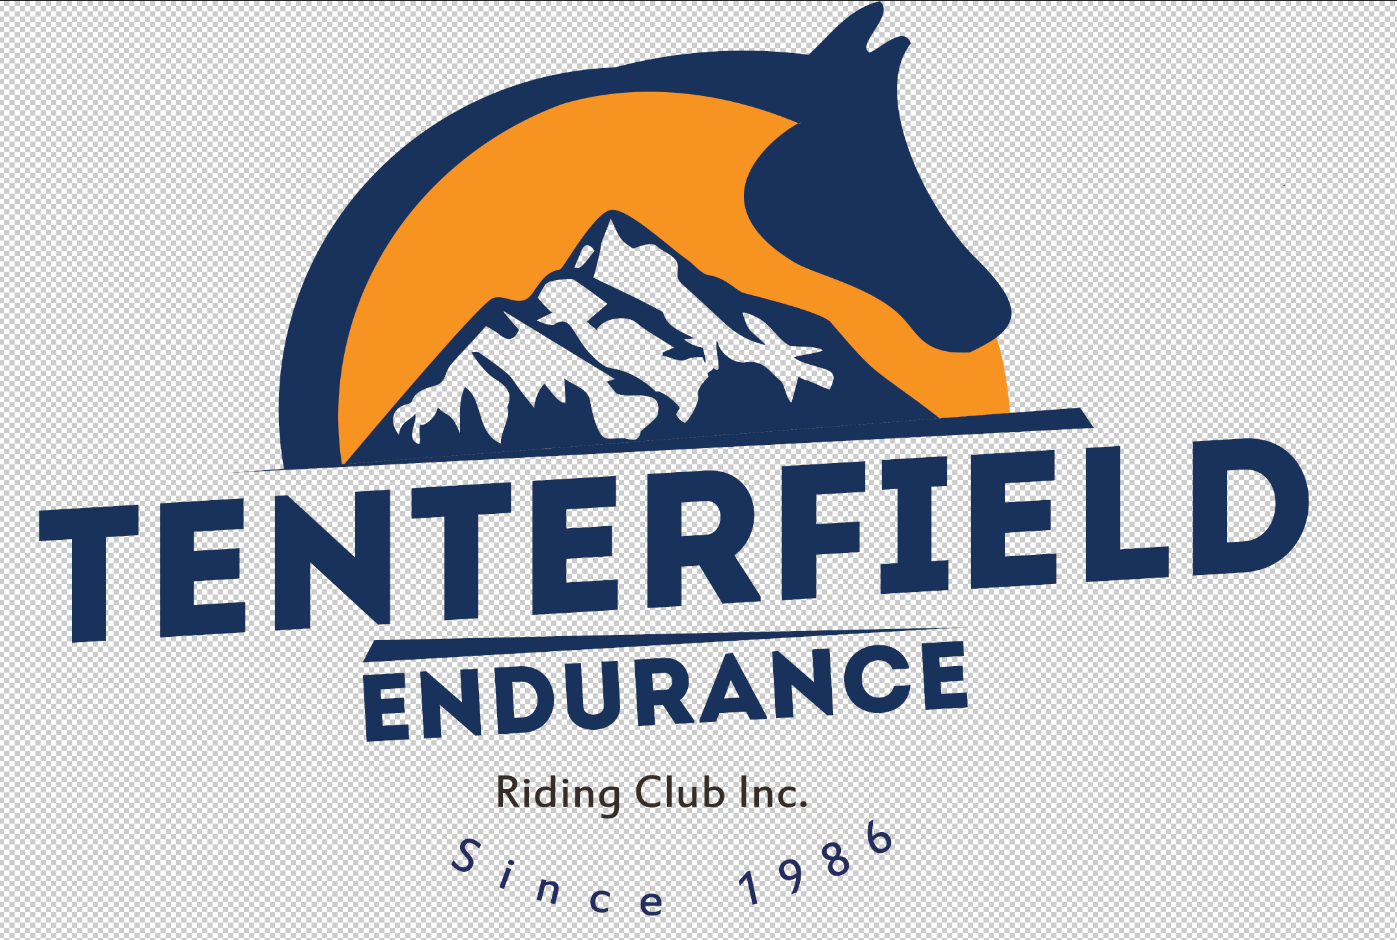 Tenterfield Endurance Riders Club